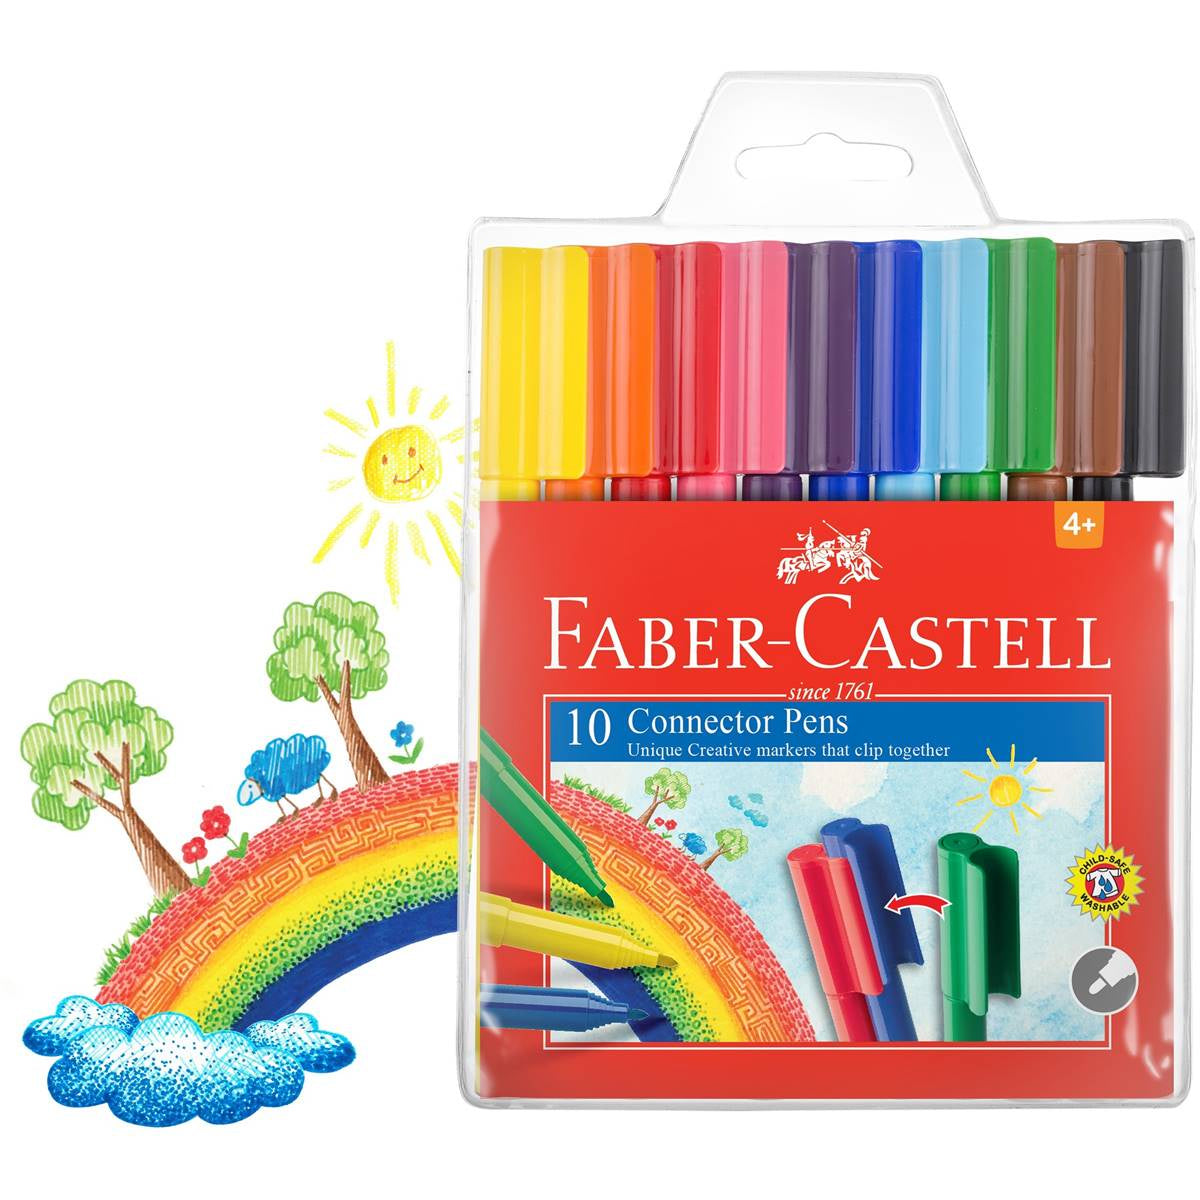 Faber-Castell Connector Pens 10pk